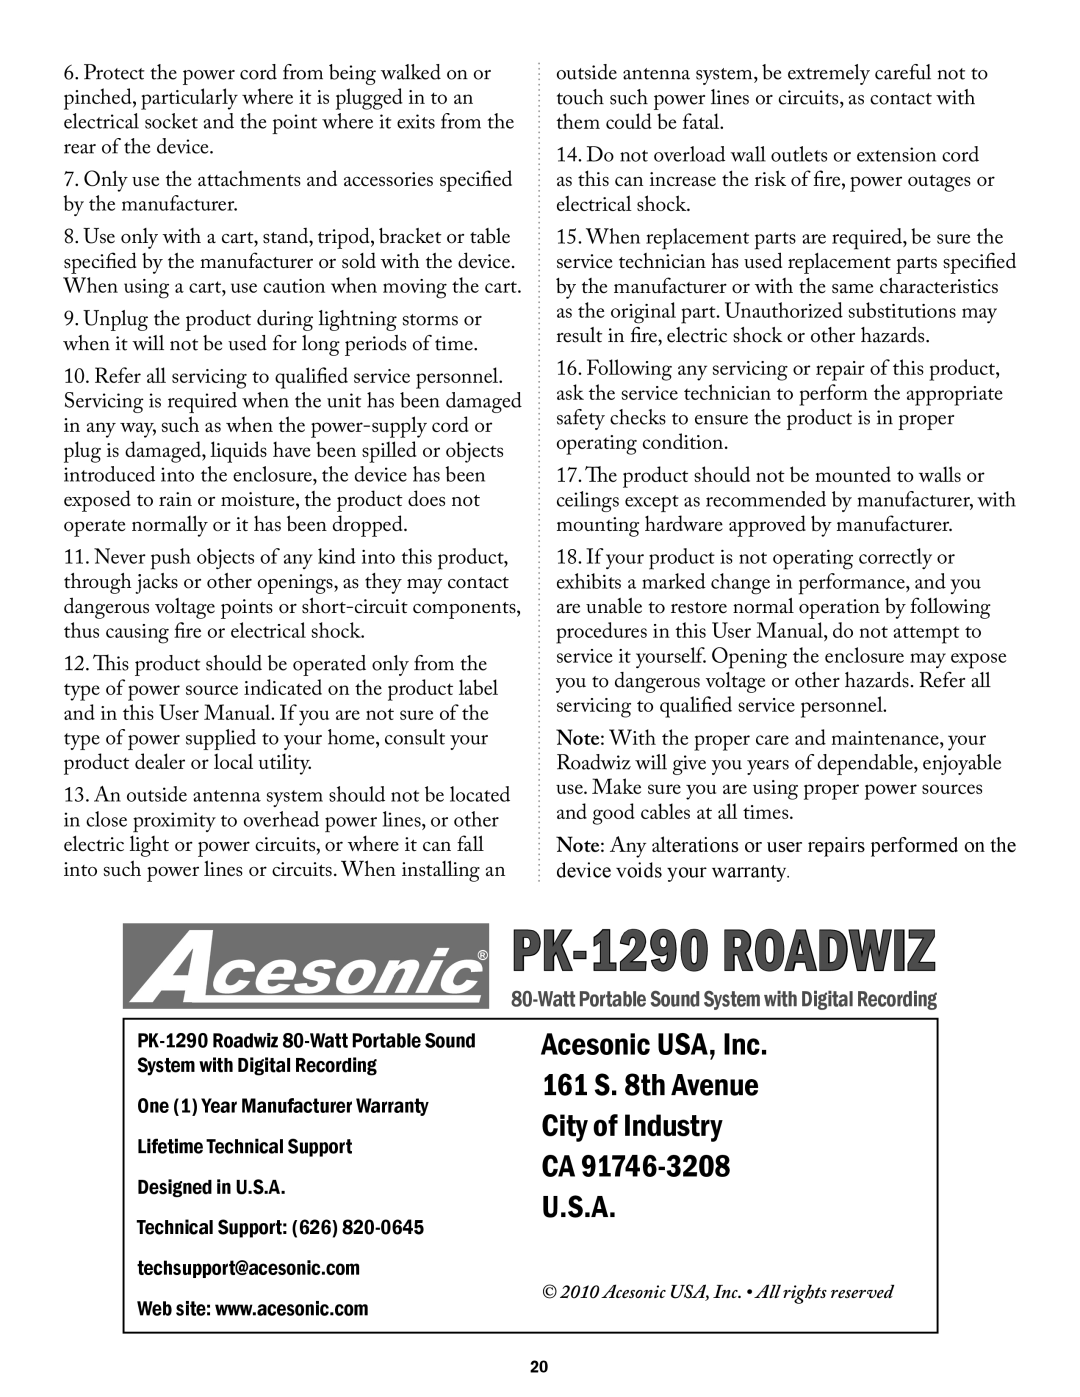 Acesonic user manual PK-1290ROADWIZ, Acesonic USA, Inc, 161 S. 8th Avenue, City of Industry, U.S.A 